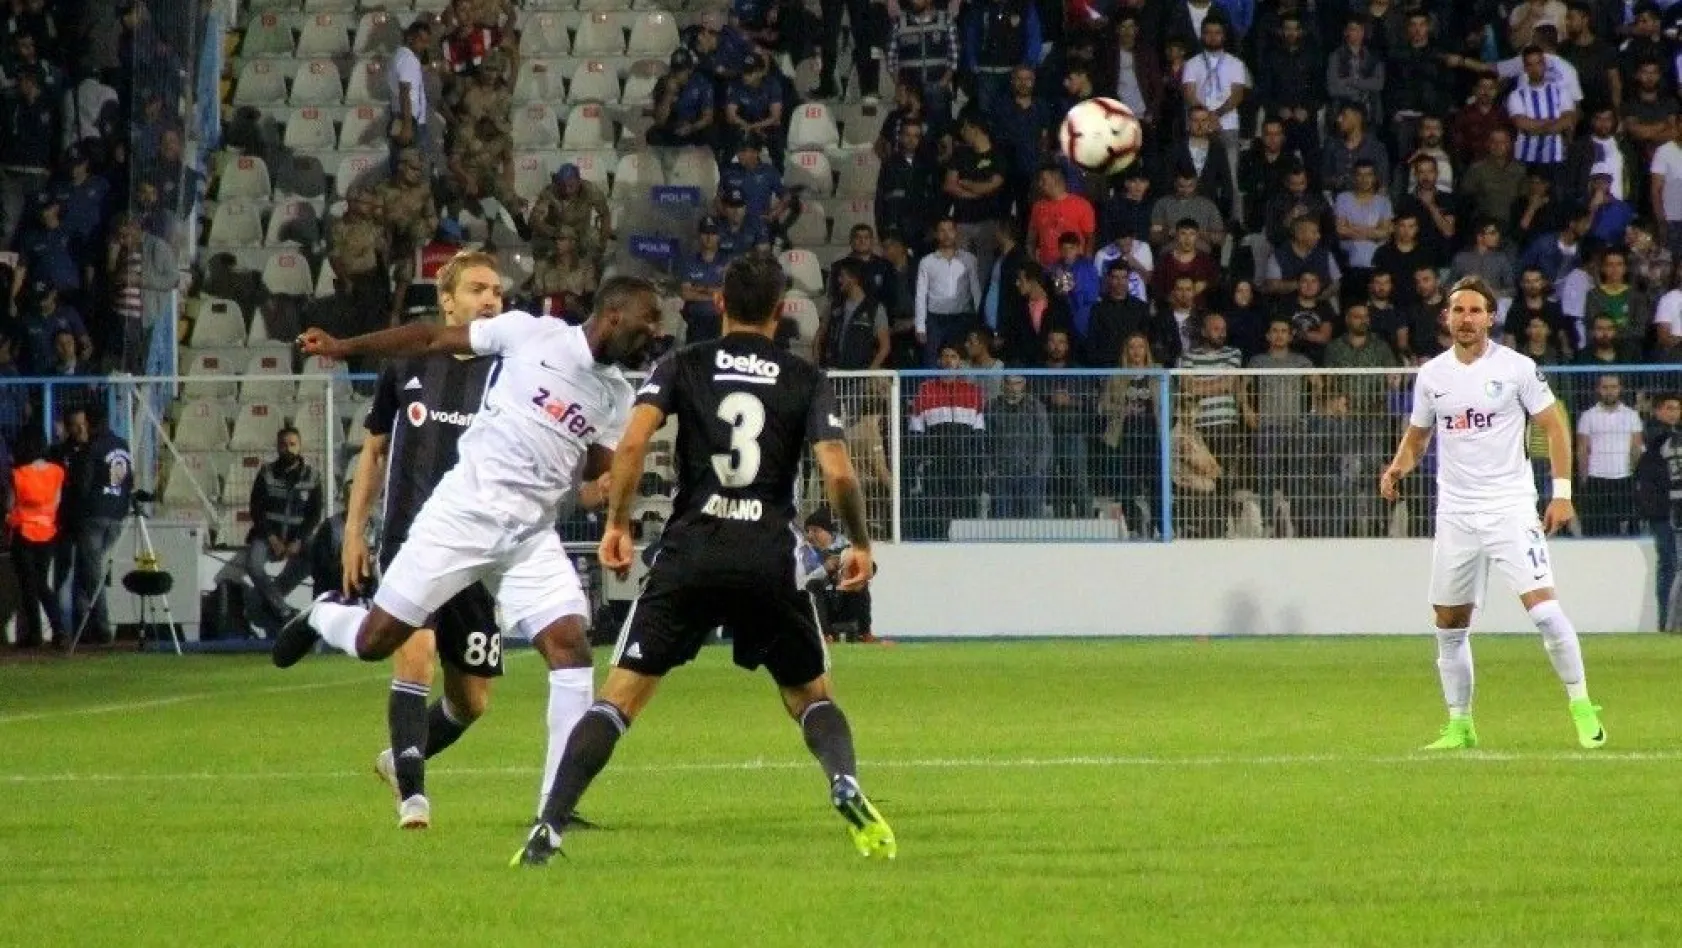 Spor Toto Süper Lig: B.B. Erzurumspor: 1 - Beşiktaş: 3 (Maç sonucu)
